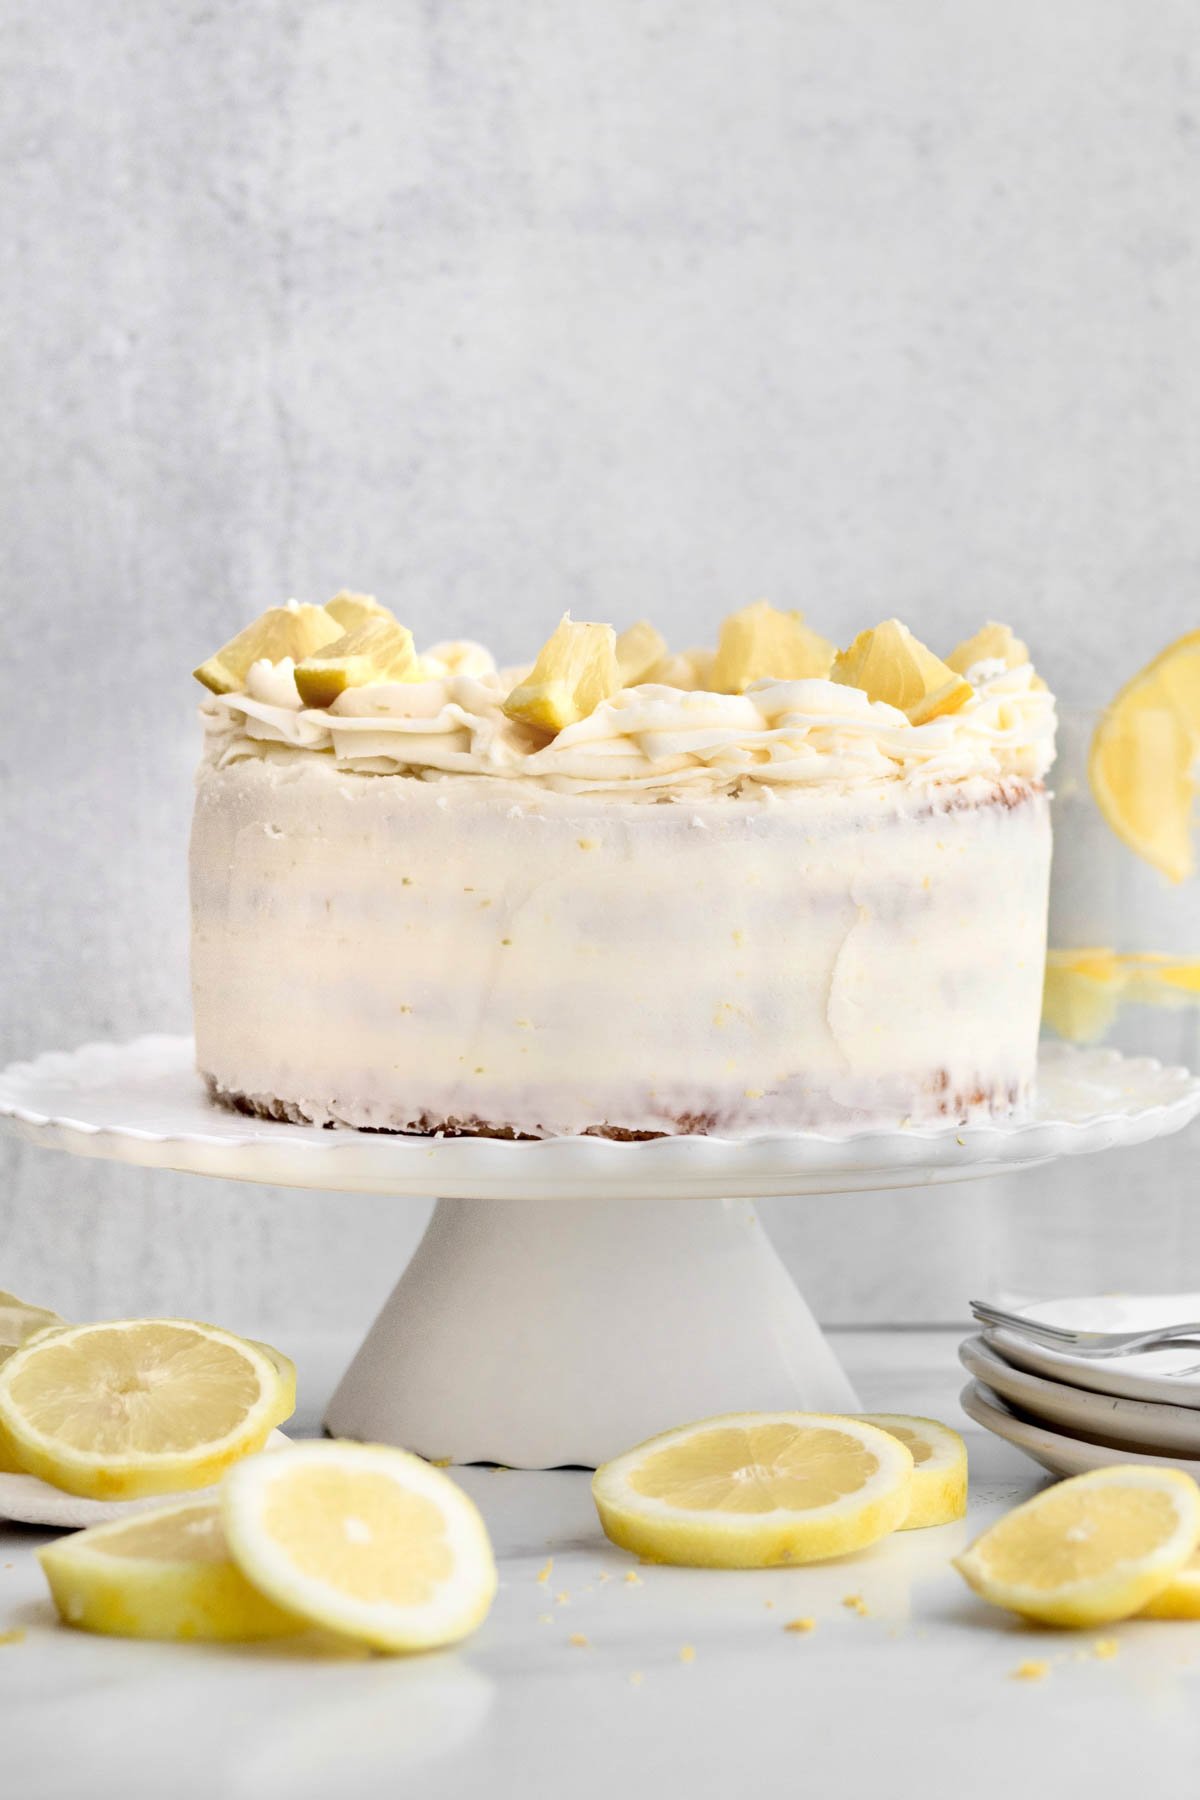 A finished Gluten Free Lemon Cake on a cake stand.